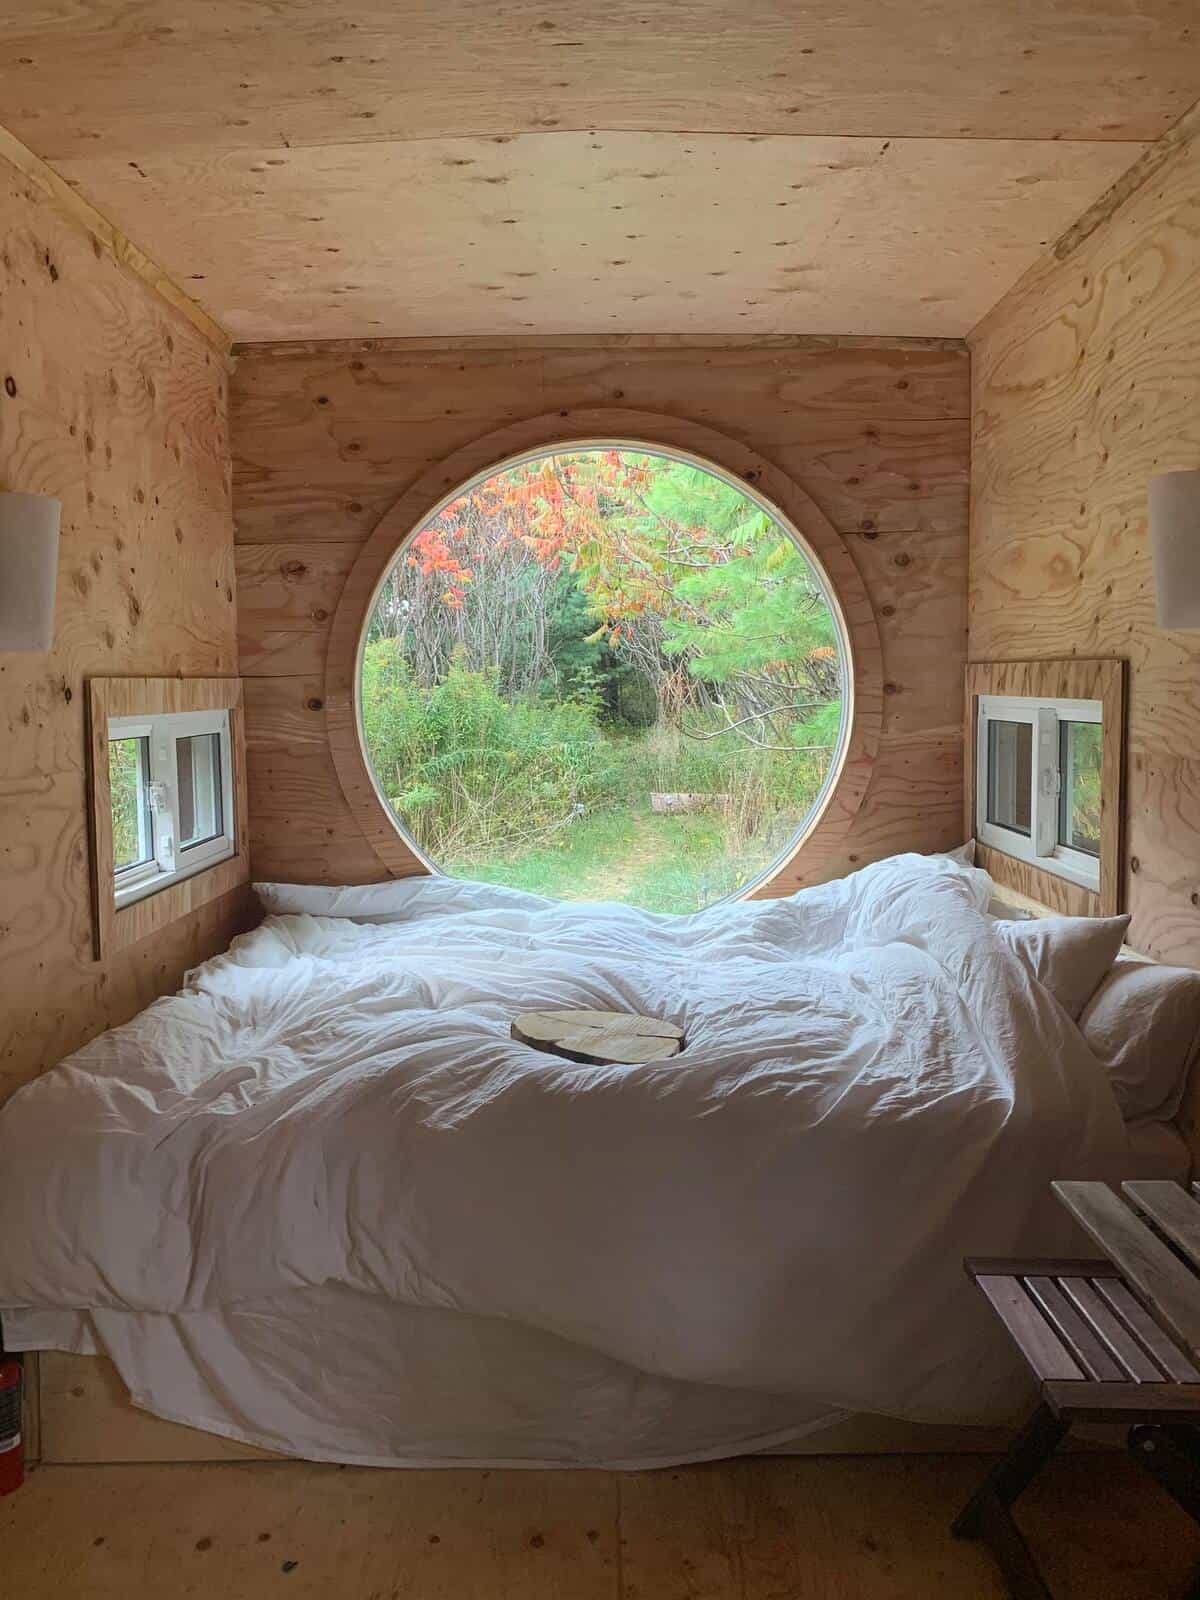 Image of Airbnb rental in Toronto, Ontario